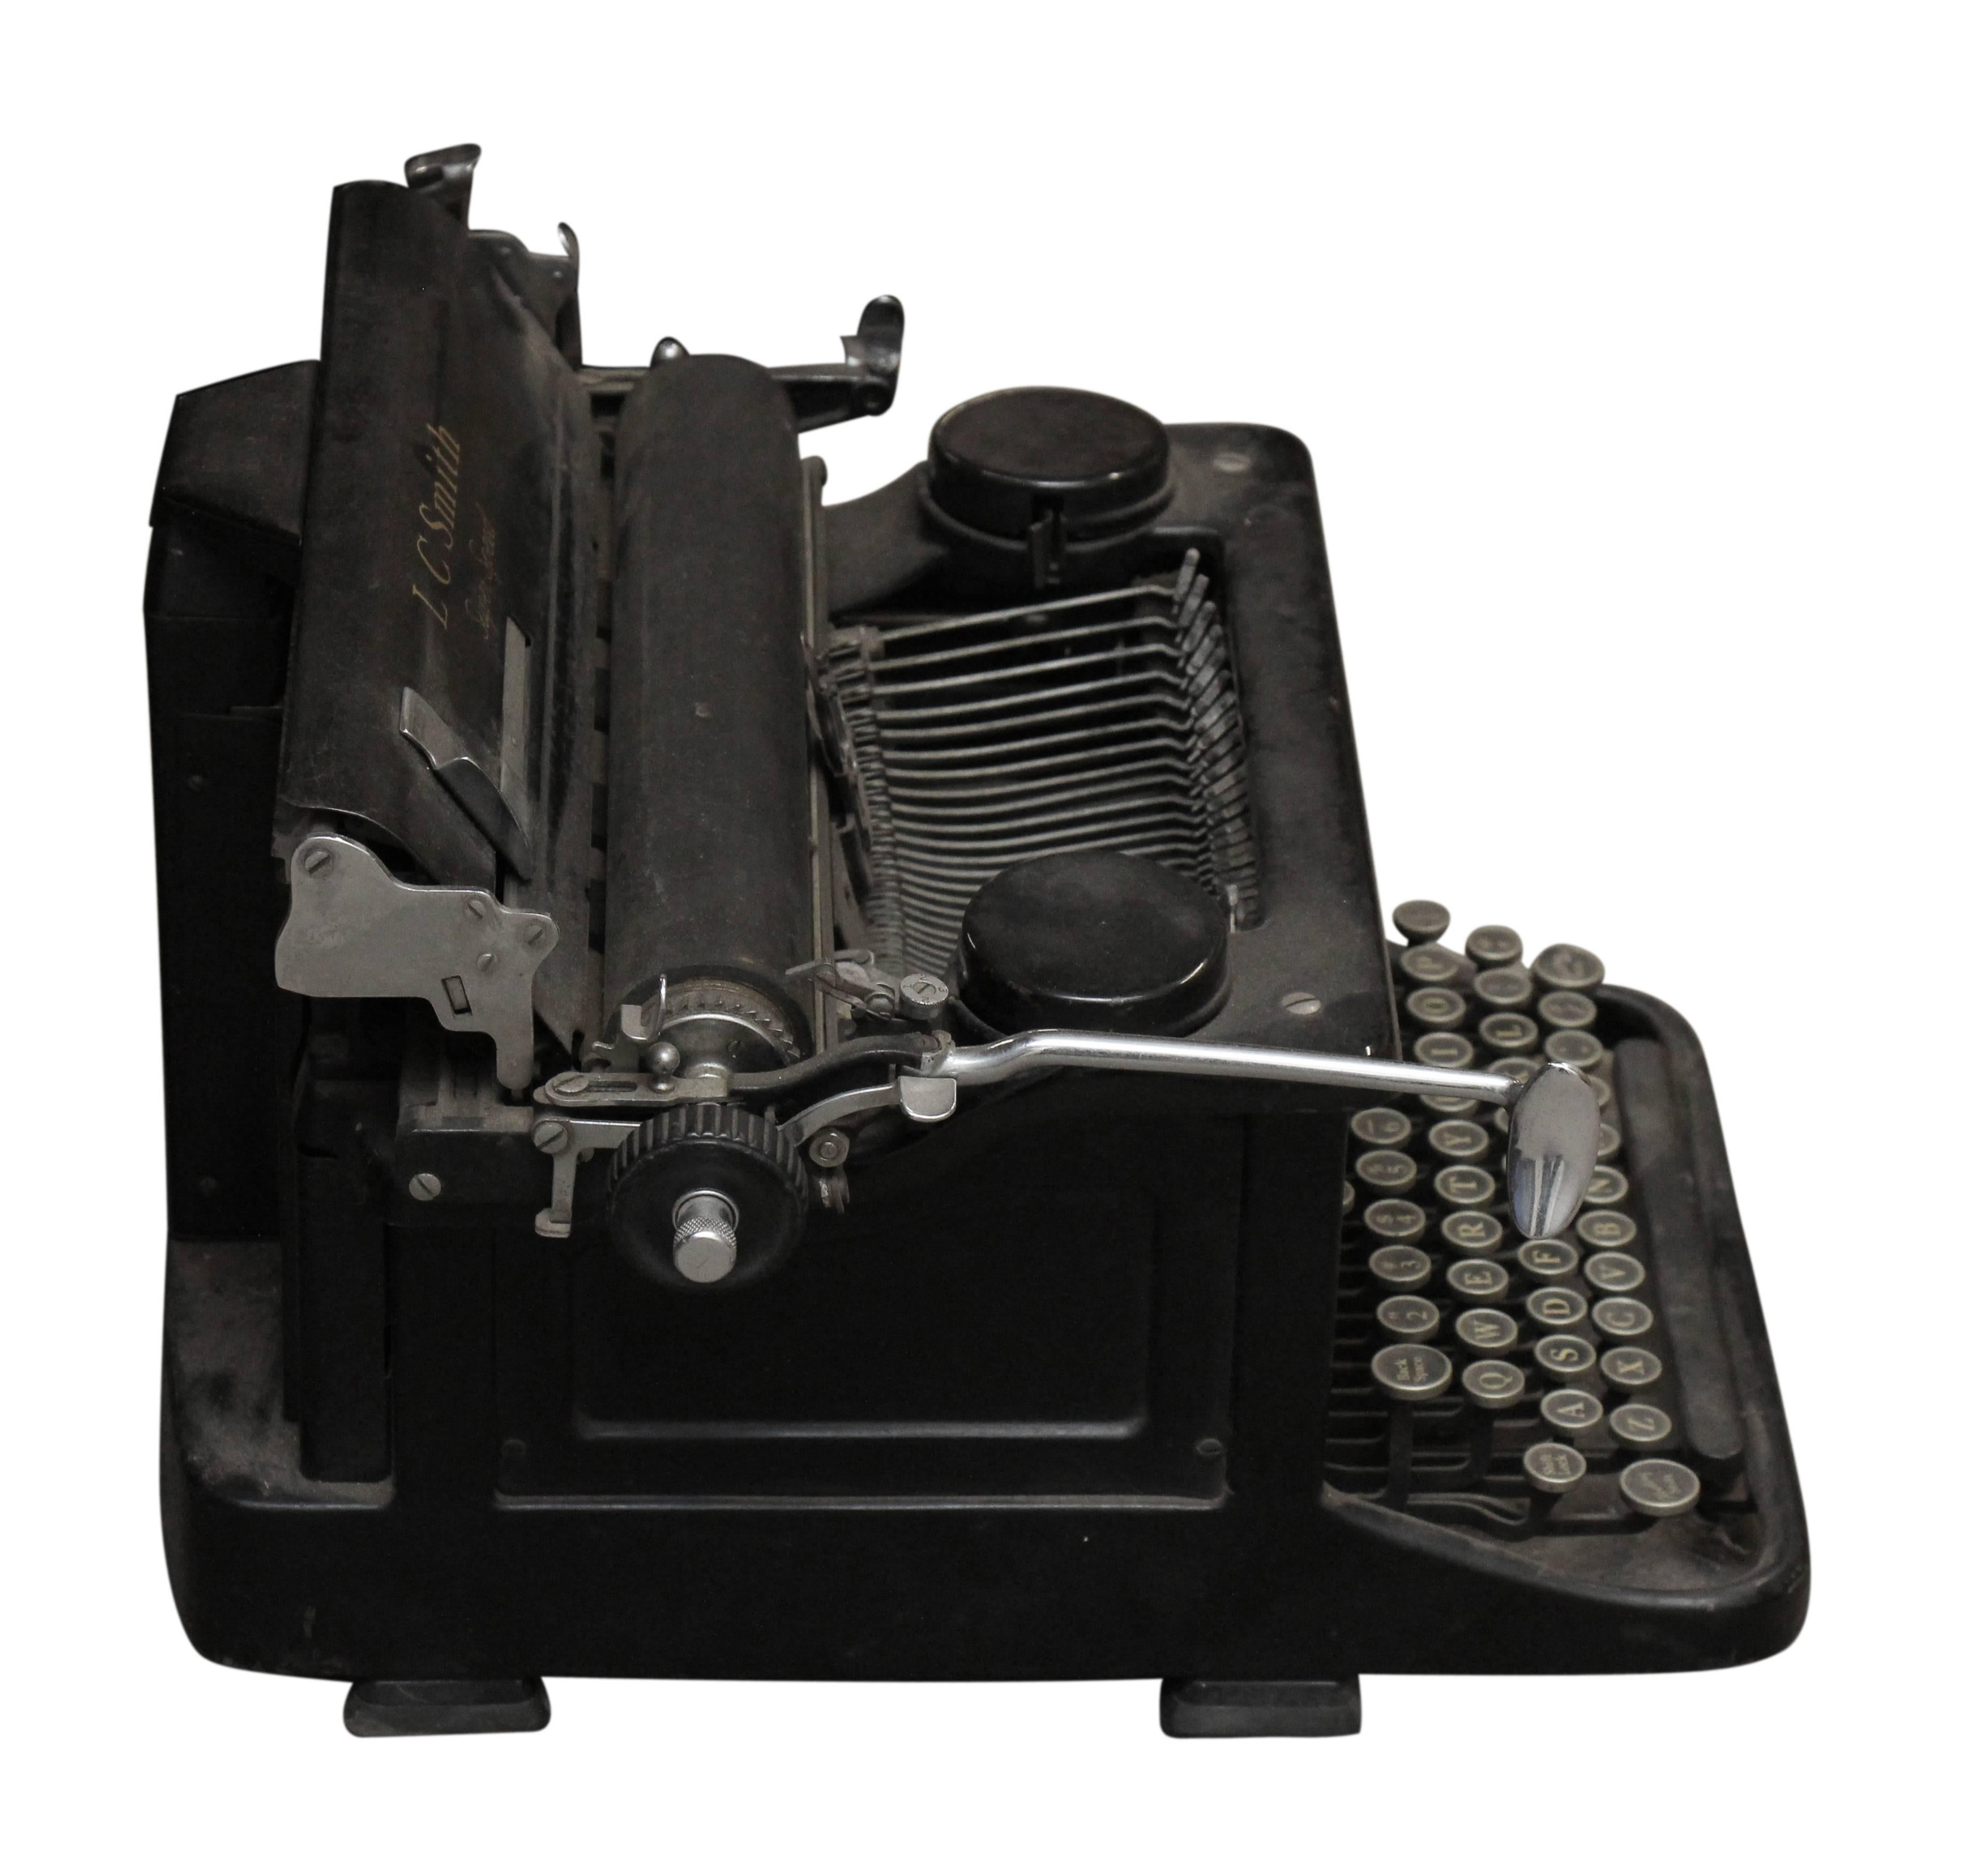 underwood typewriter value